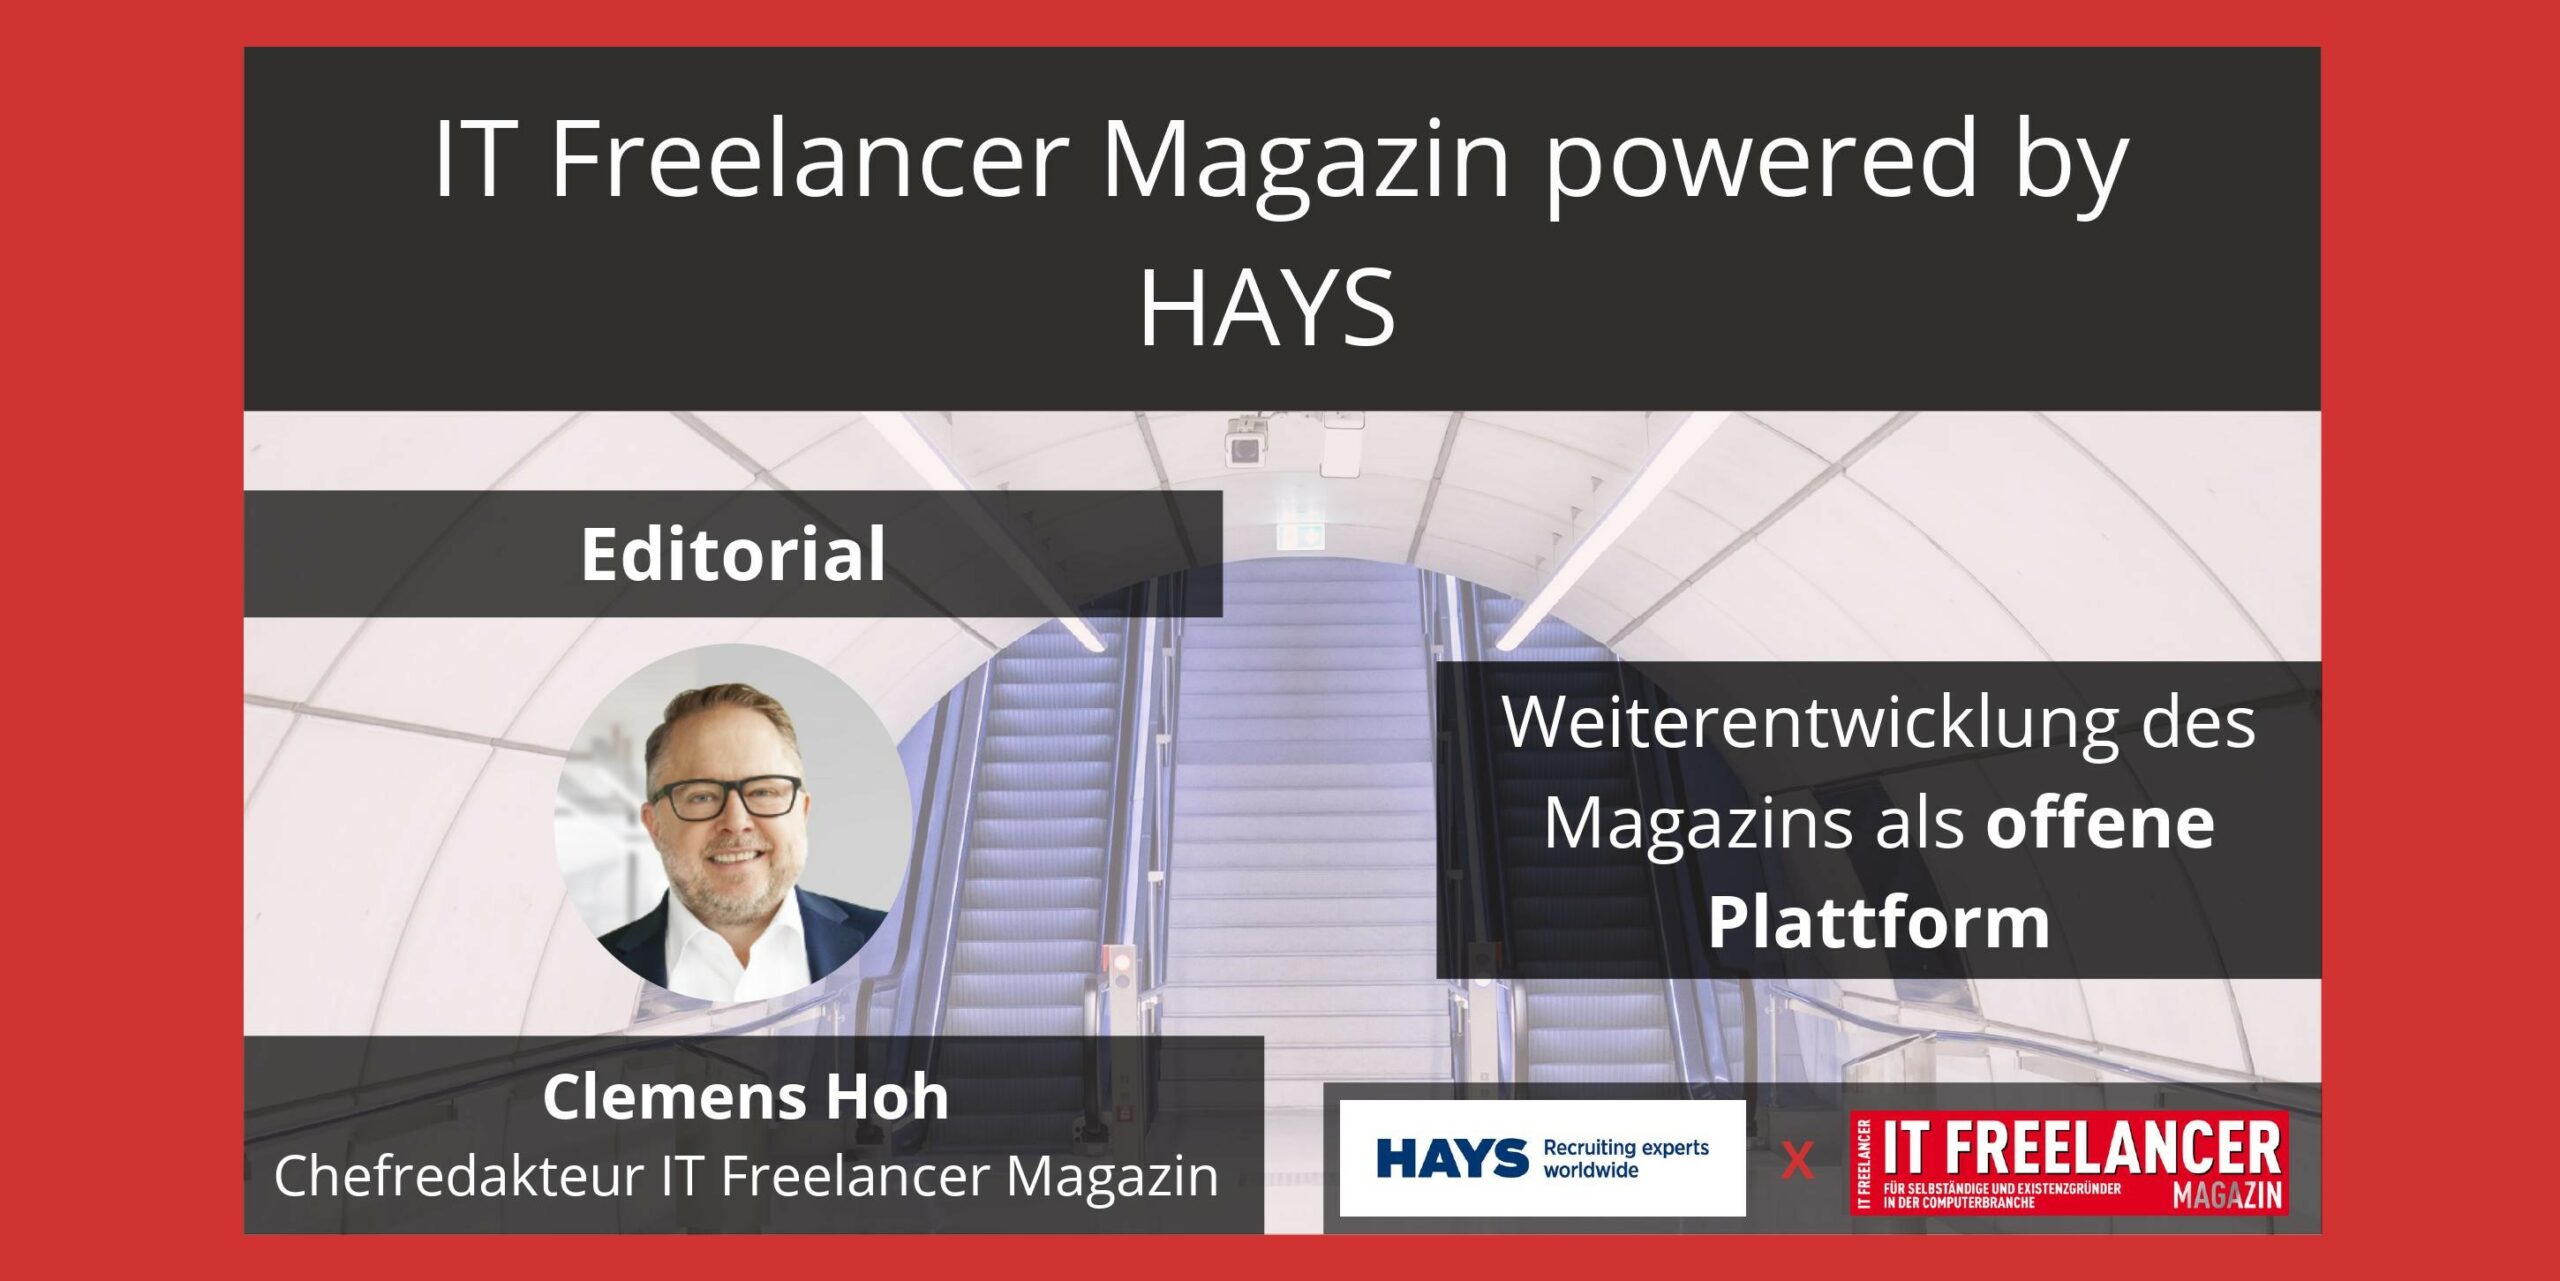 IT Freelancer Magazin powered by HAYS